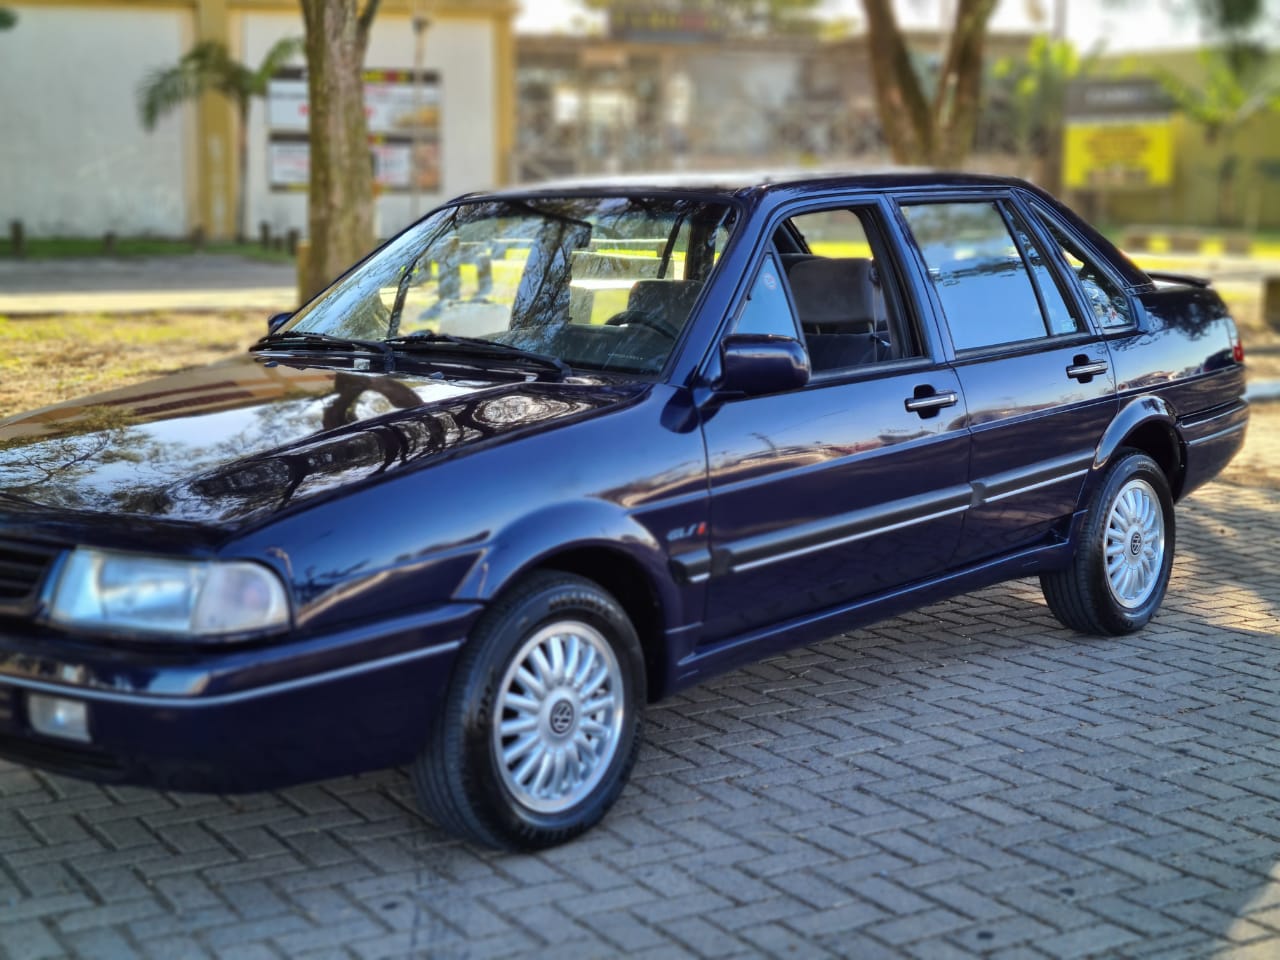 VW/Santana GLS 2000i - 1996/1996